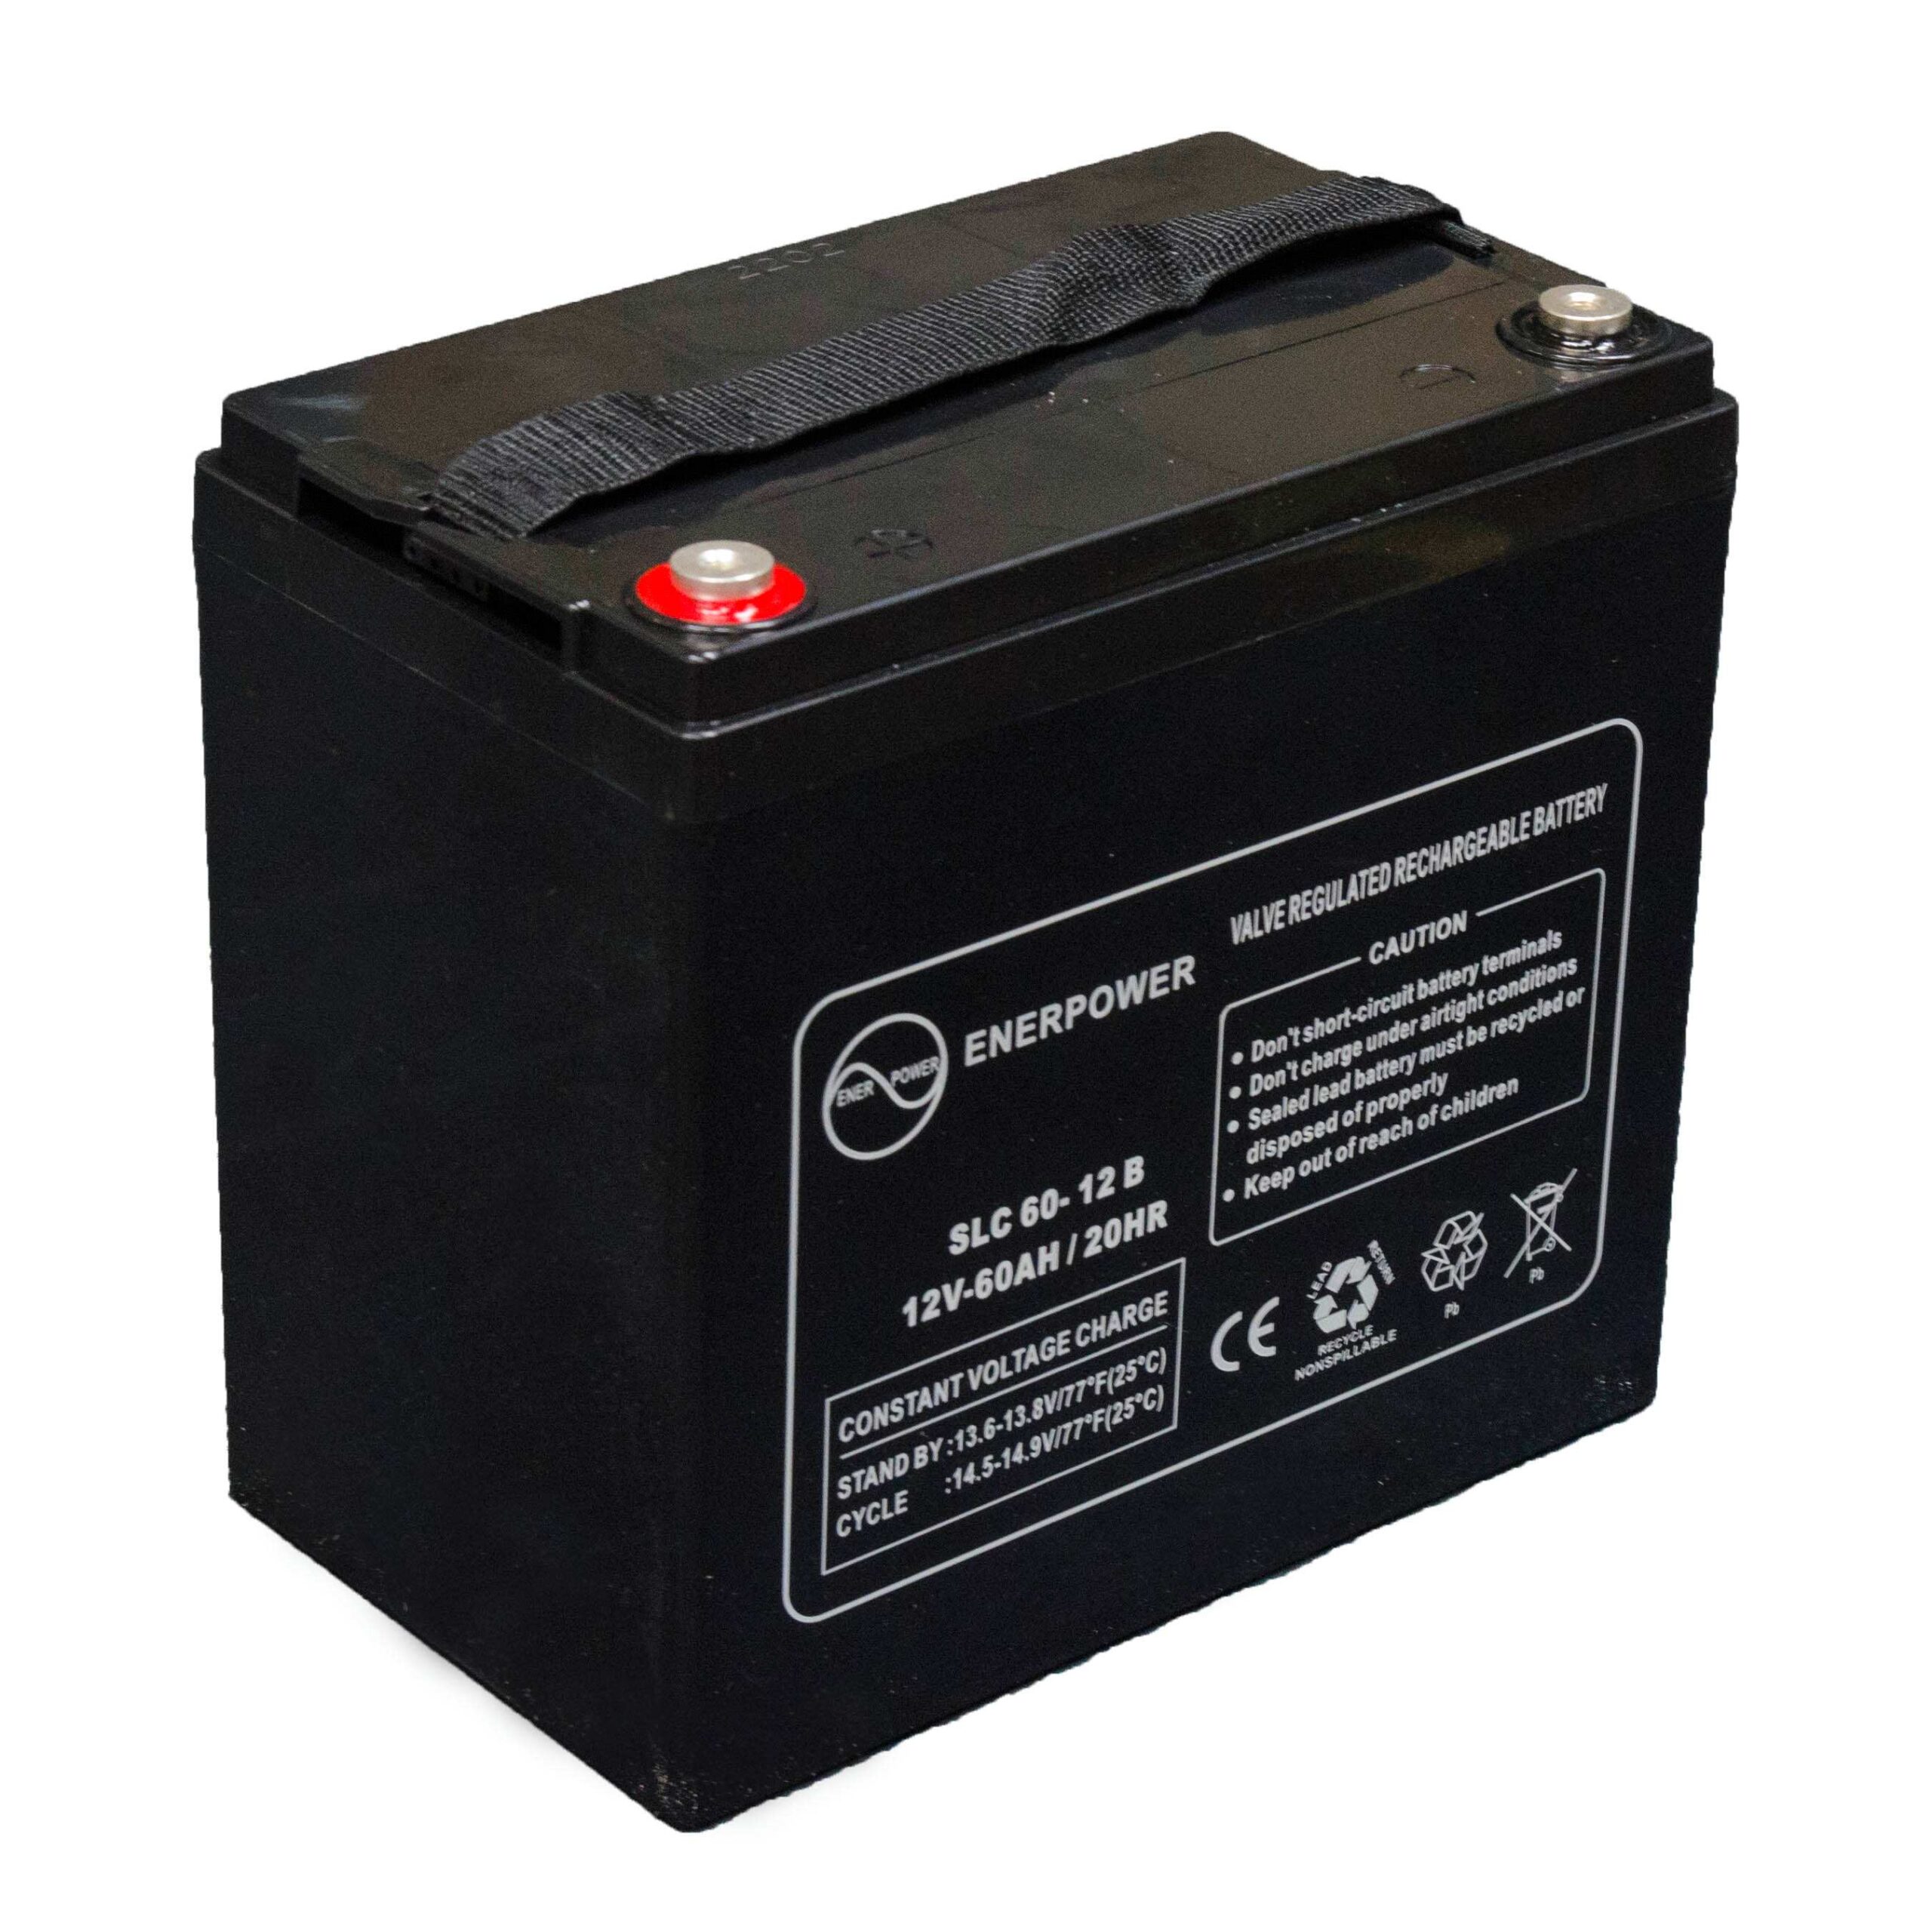 SLC 60-12 12V 60Ah AGM ENERPOWER battery